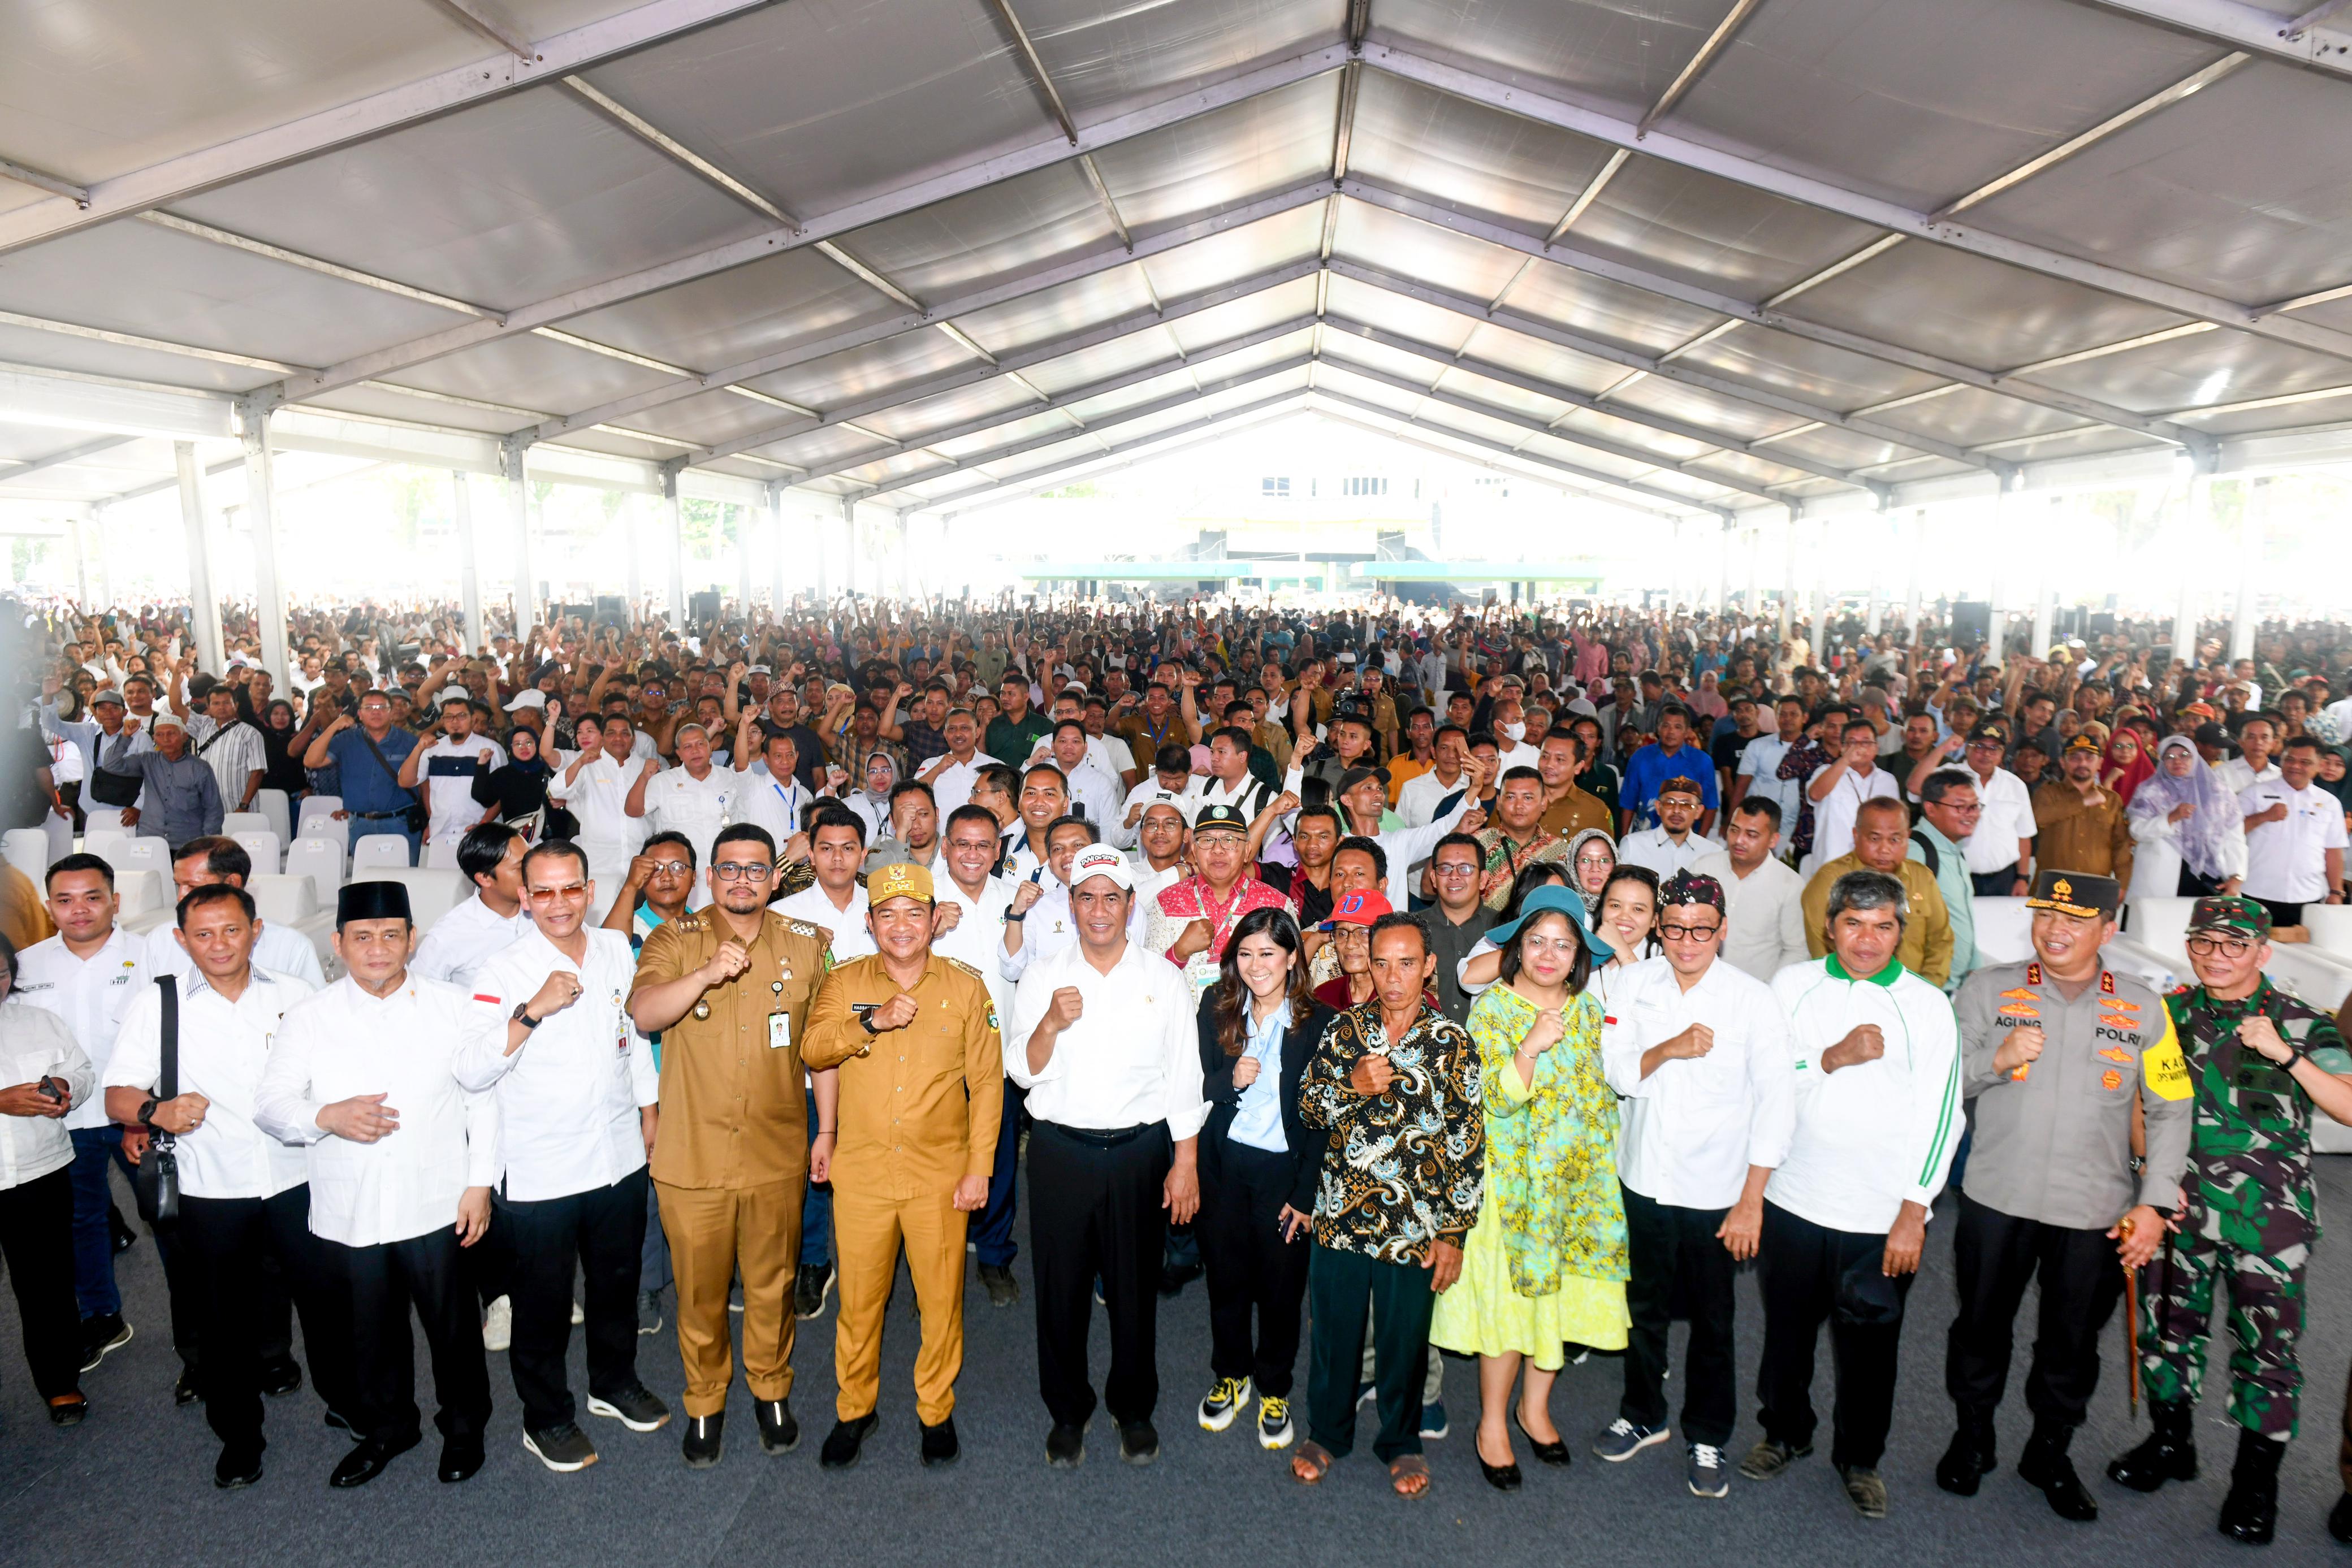 Mentan Kunjungi Sumut, 20.000 Petani Sambut di Medan